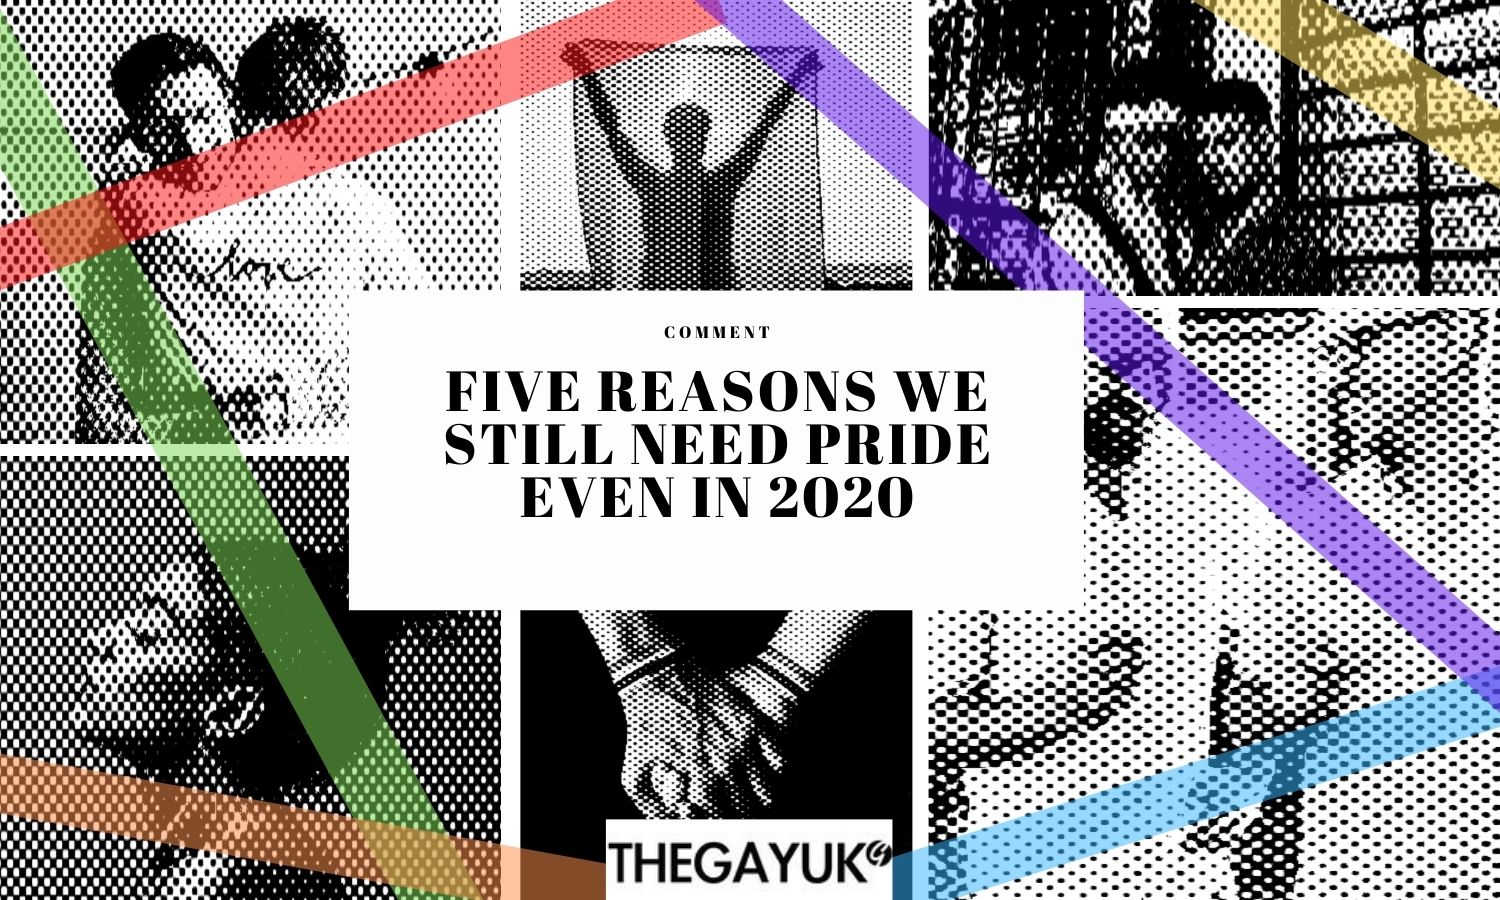 5 reasons we still need pride